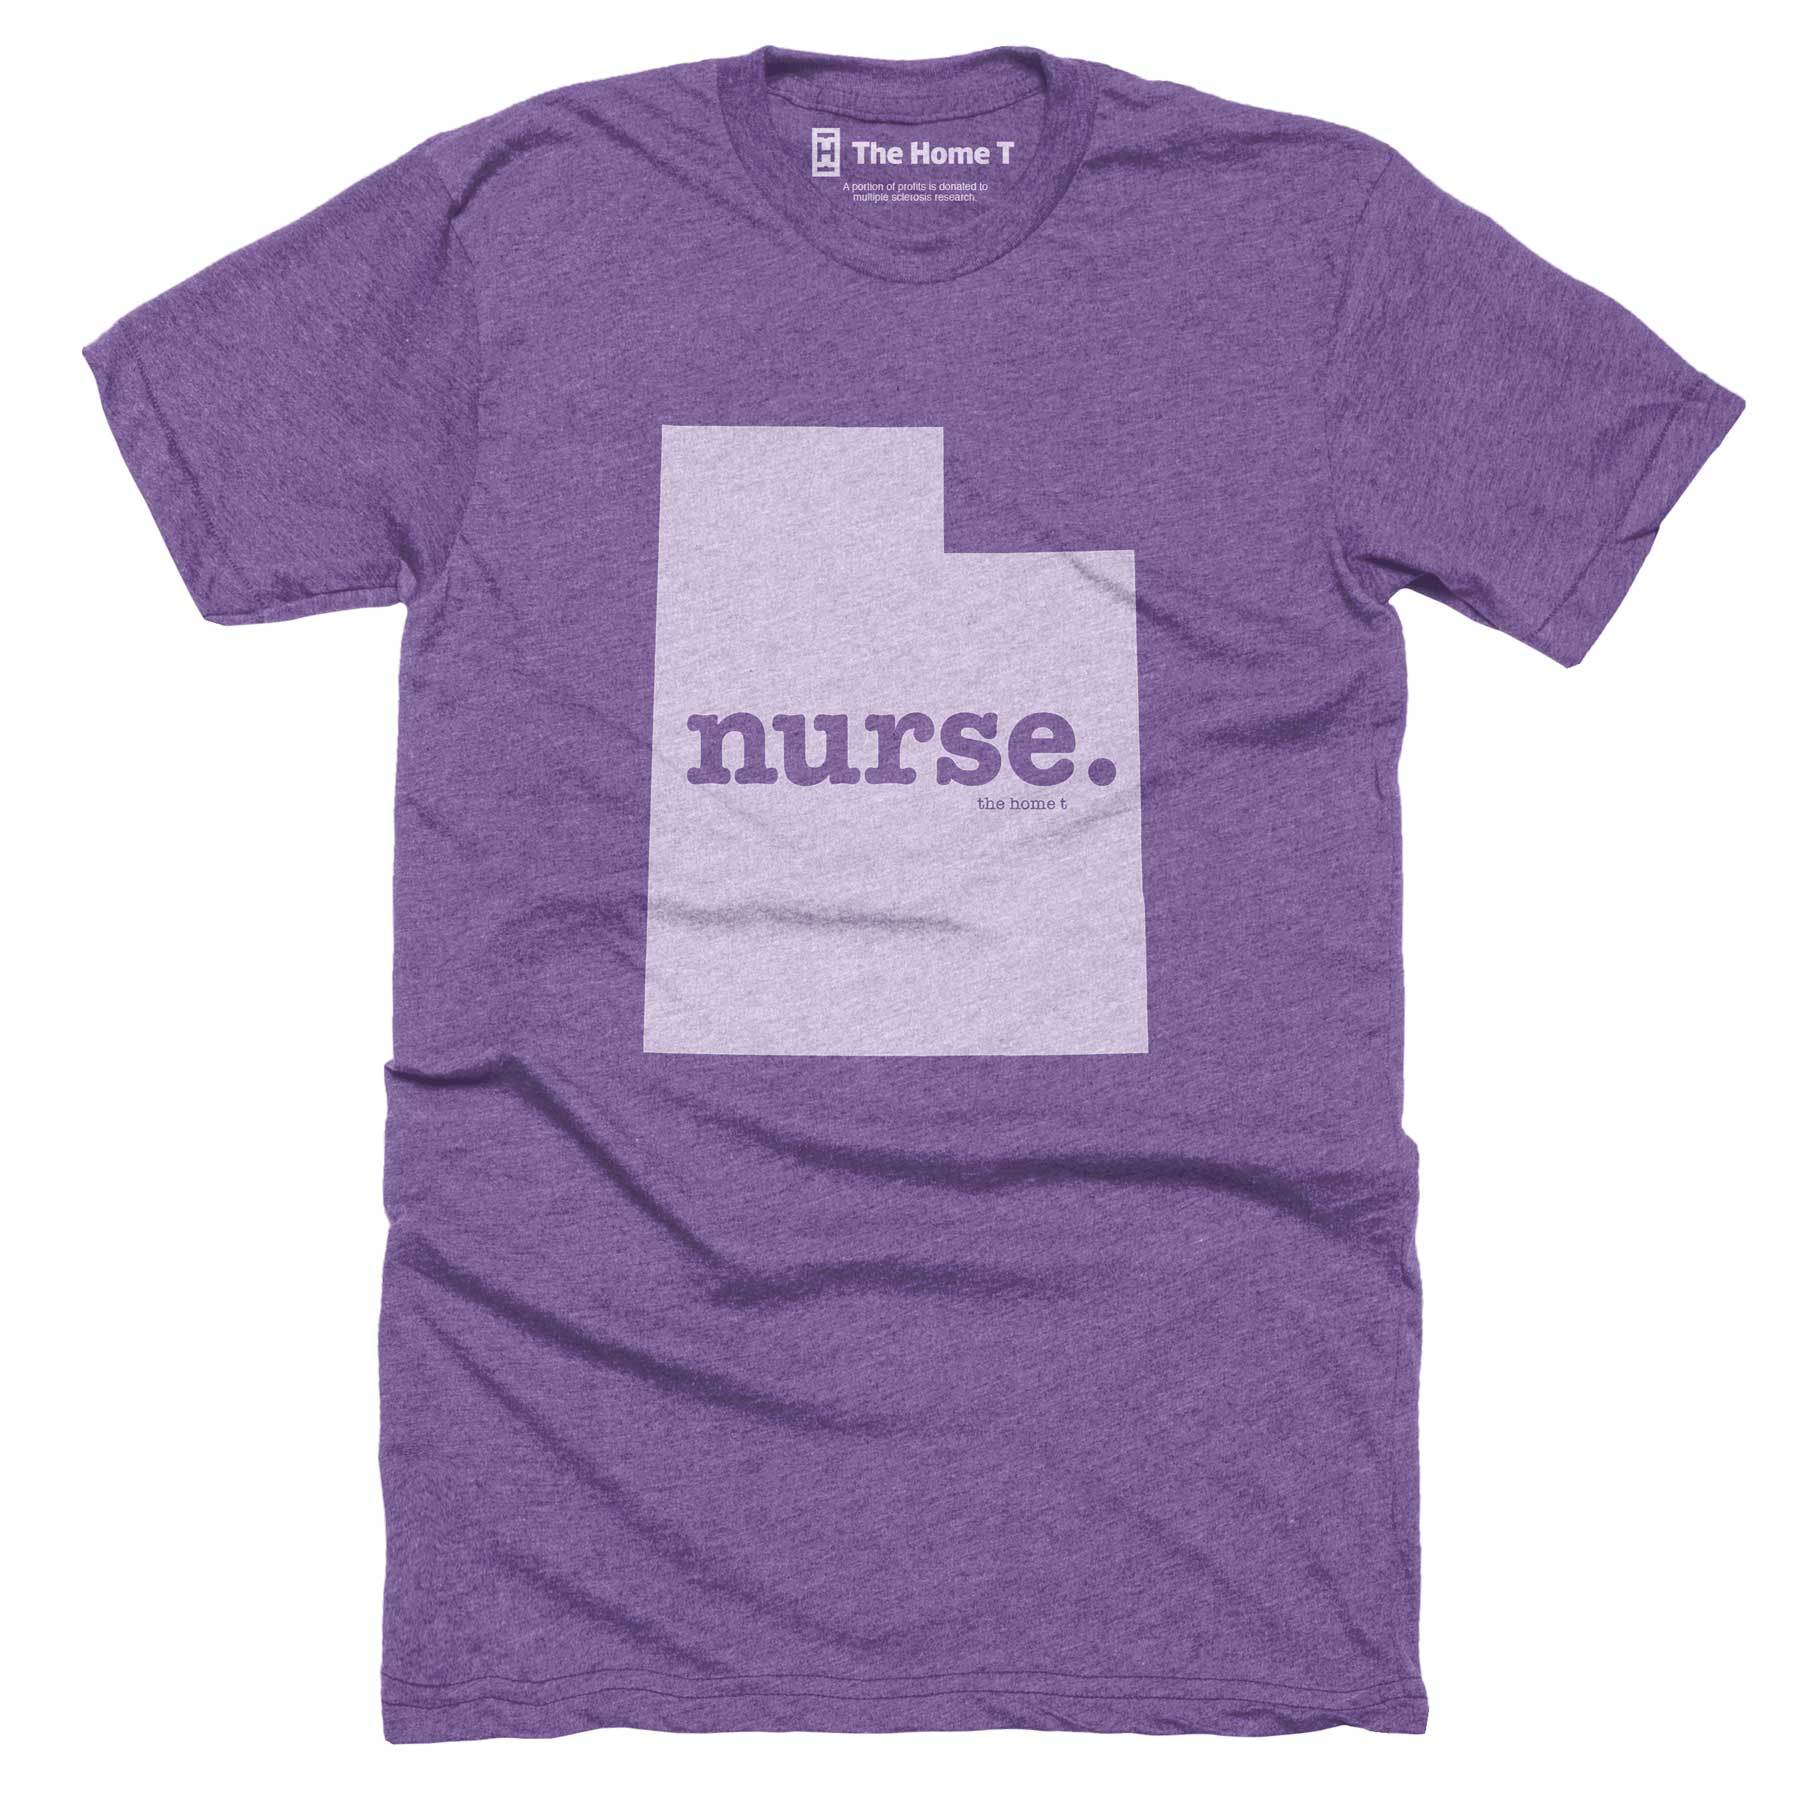 Utah Nurse Home T-Shirt Occupation The Home T